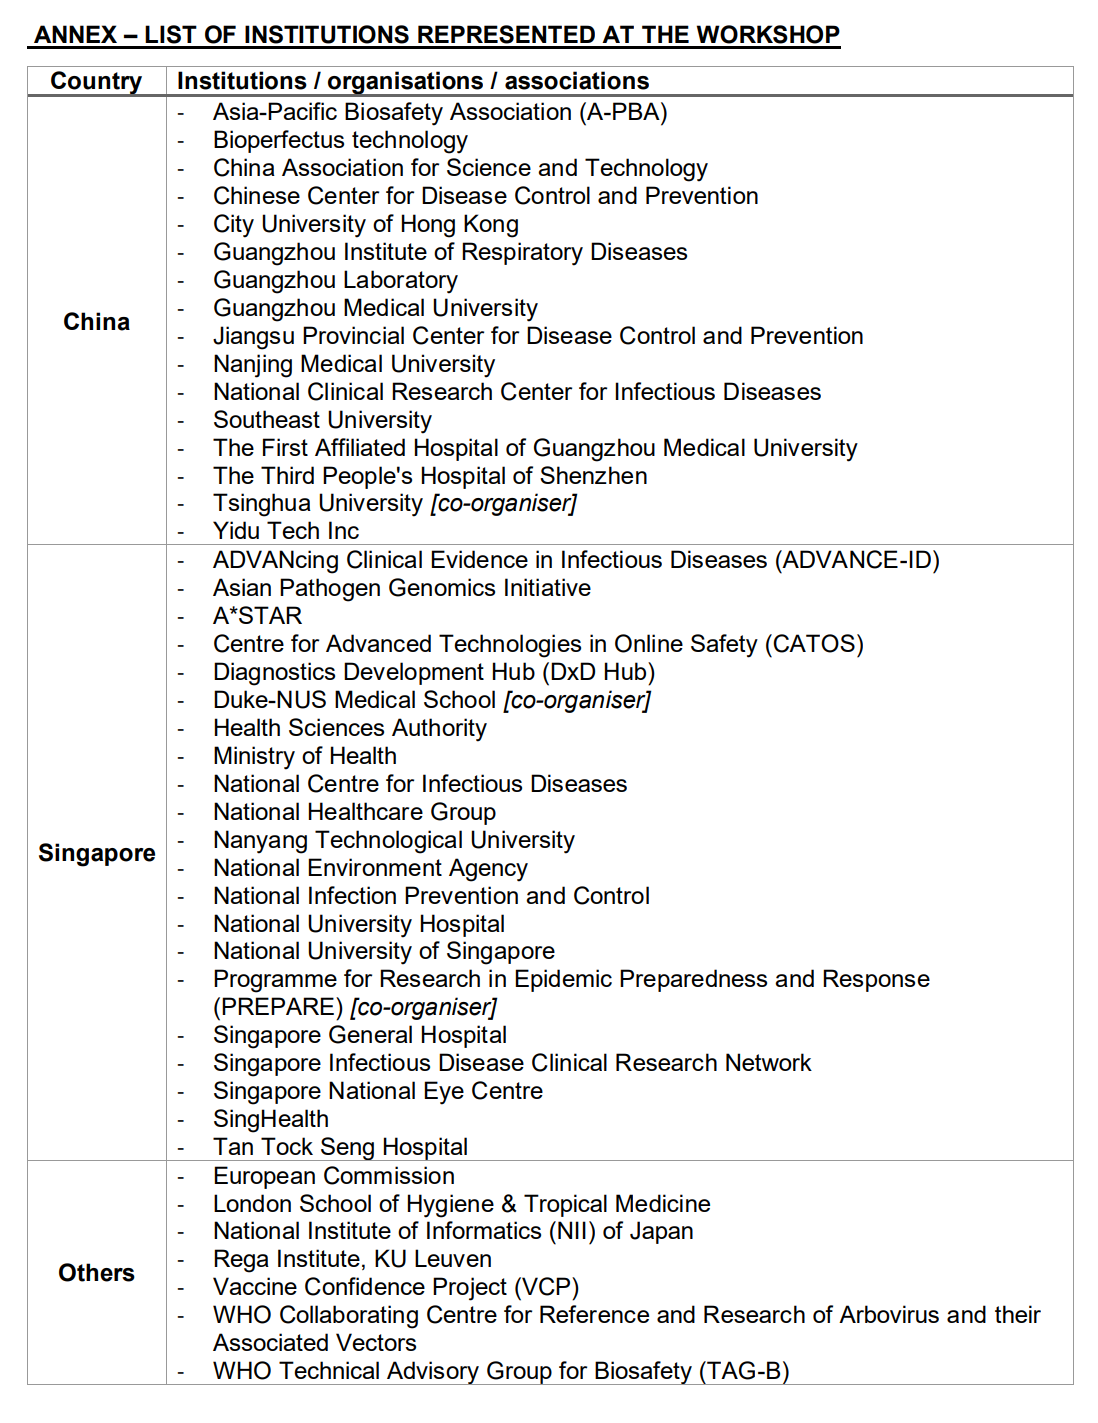 List of institutions represented